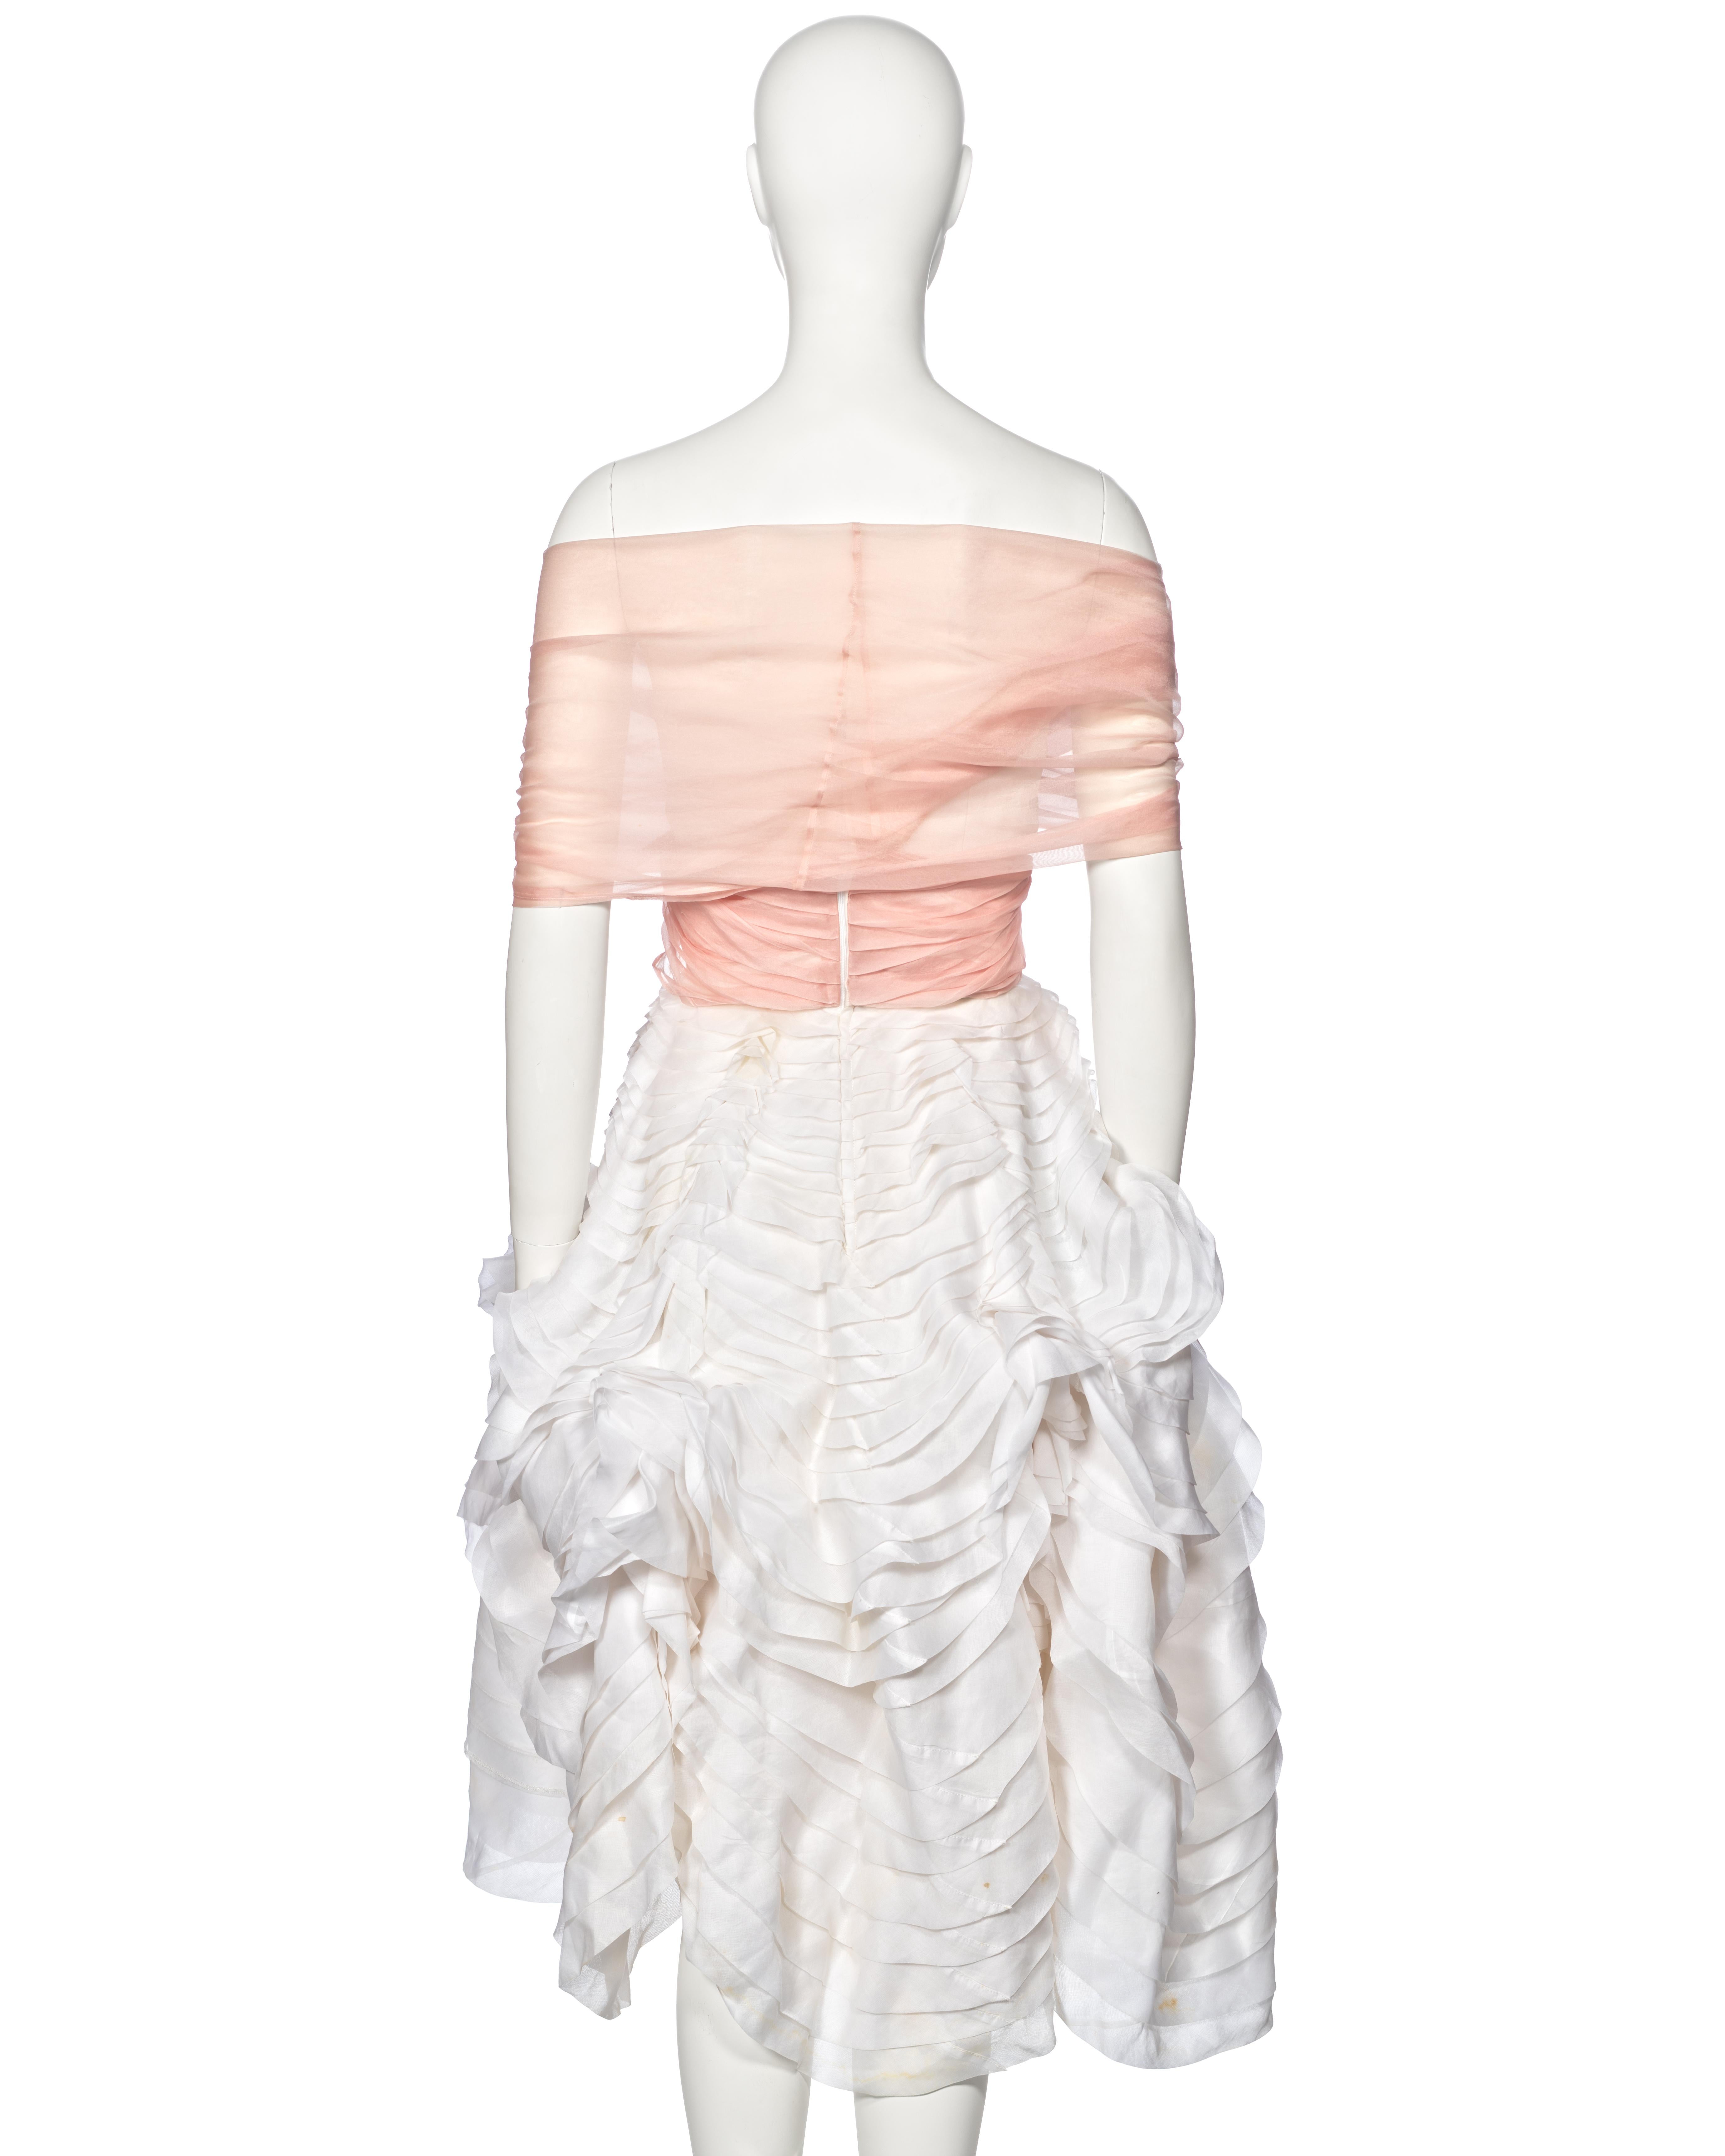 John Galliano Blanche DuBois Clam Dress, ss 1988 For Sale 8